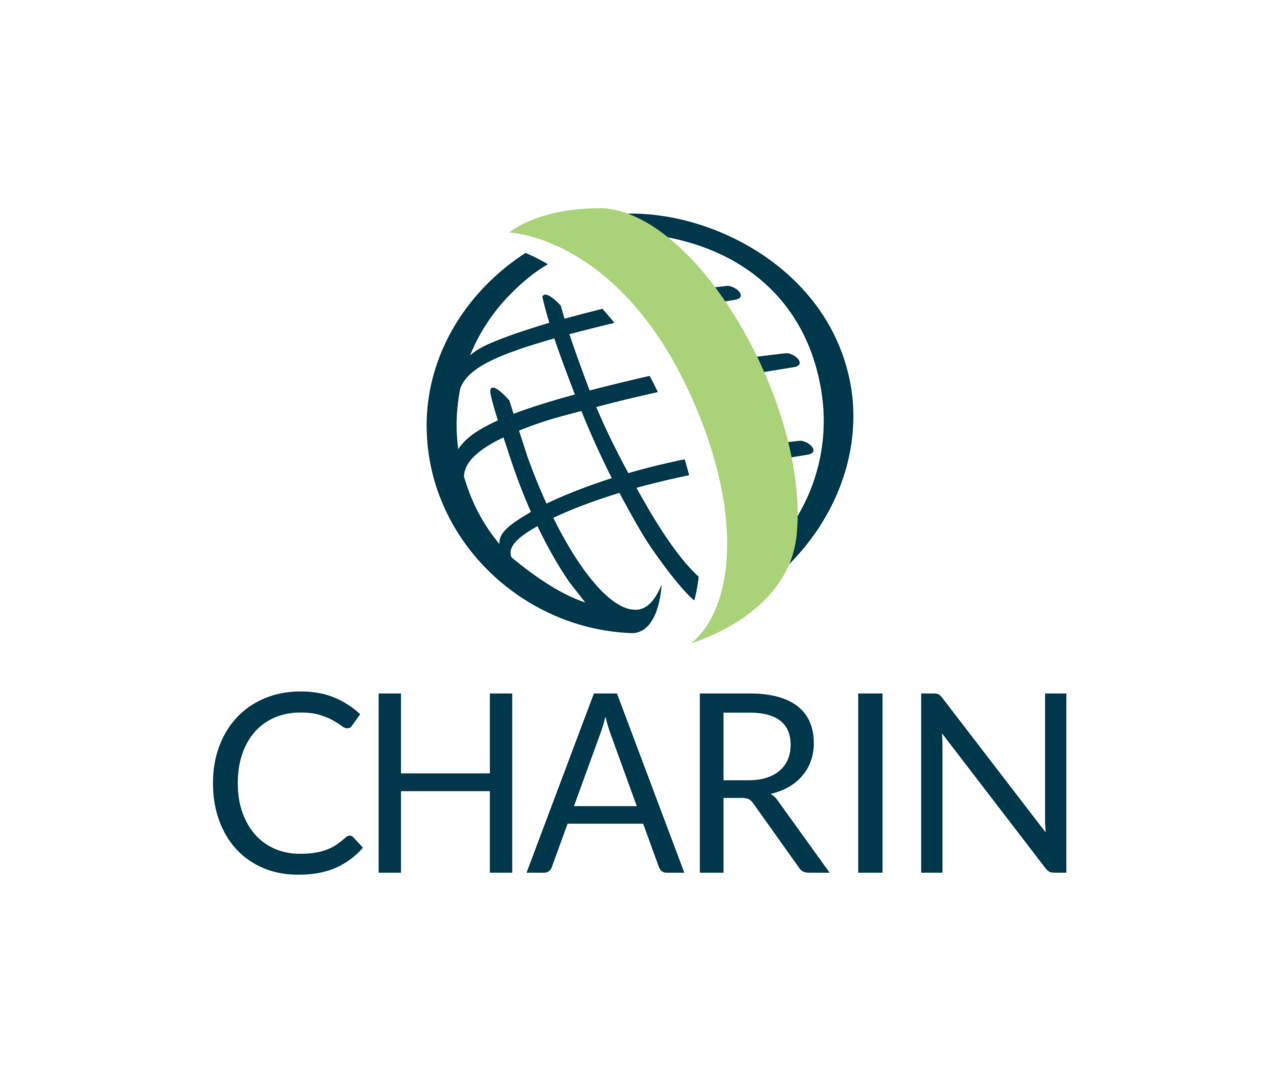 CharIN North America Focus Groups Webinar